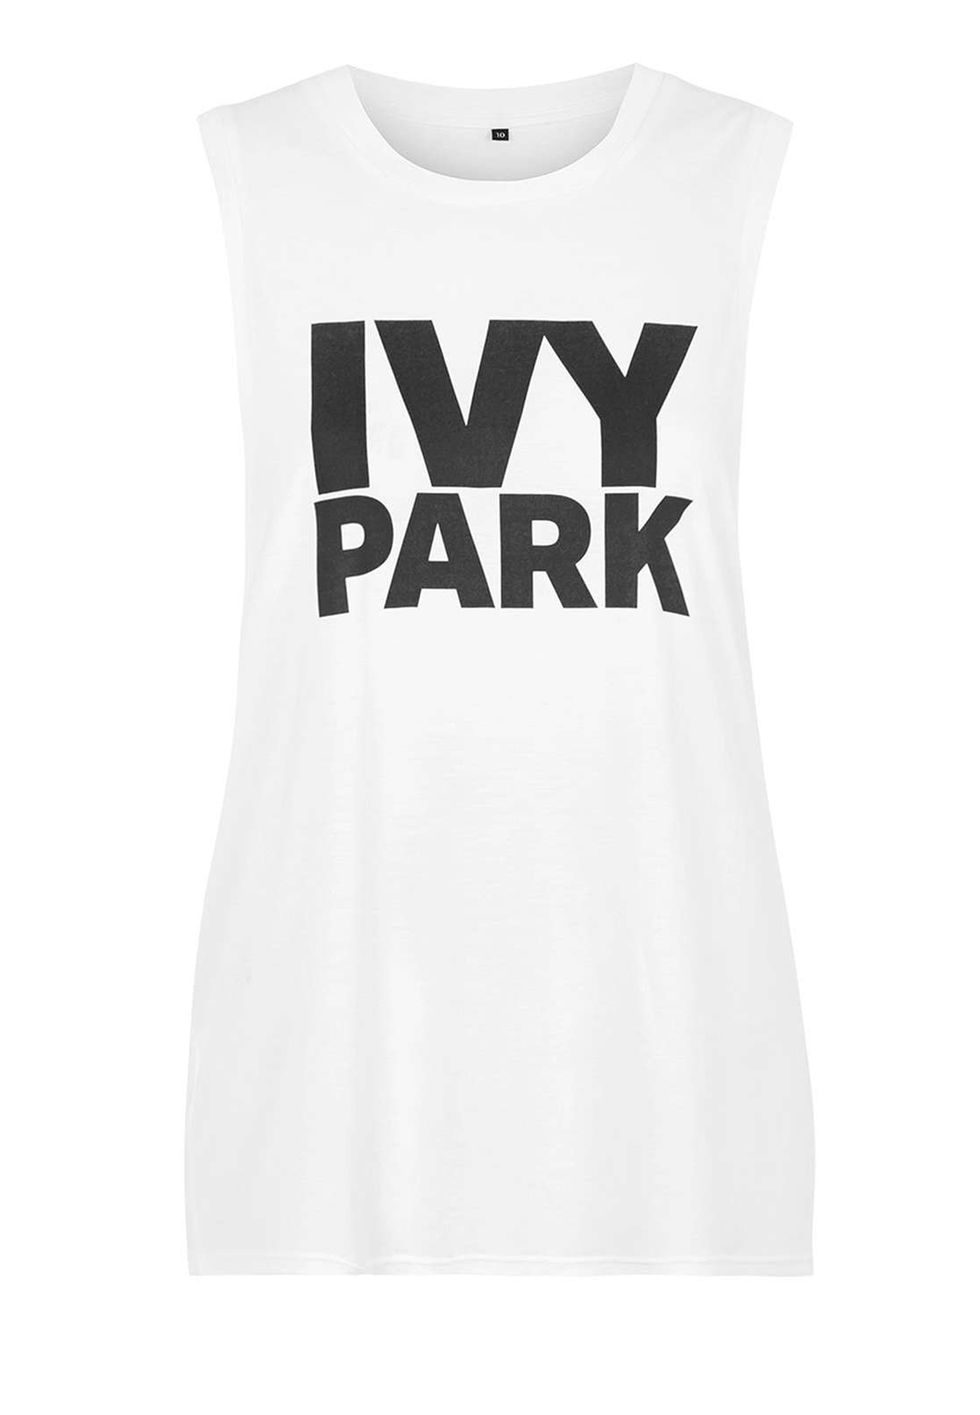 Ivy Park